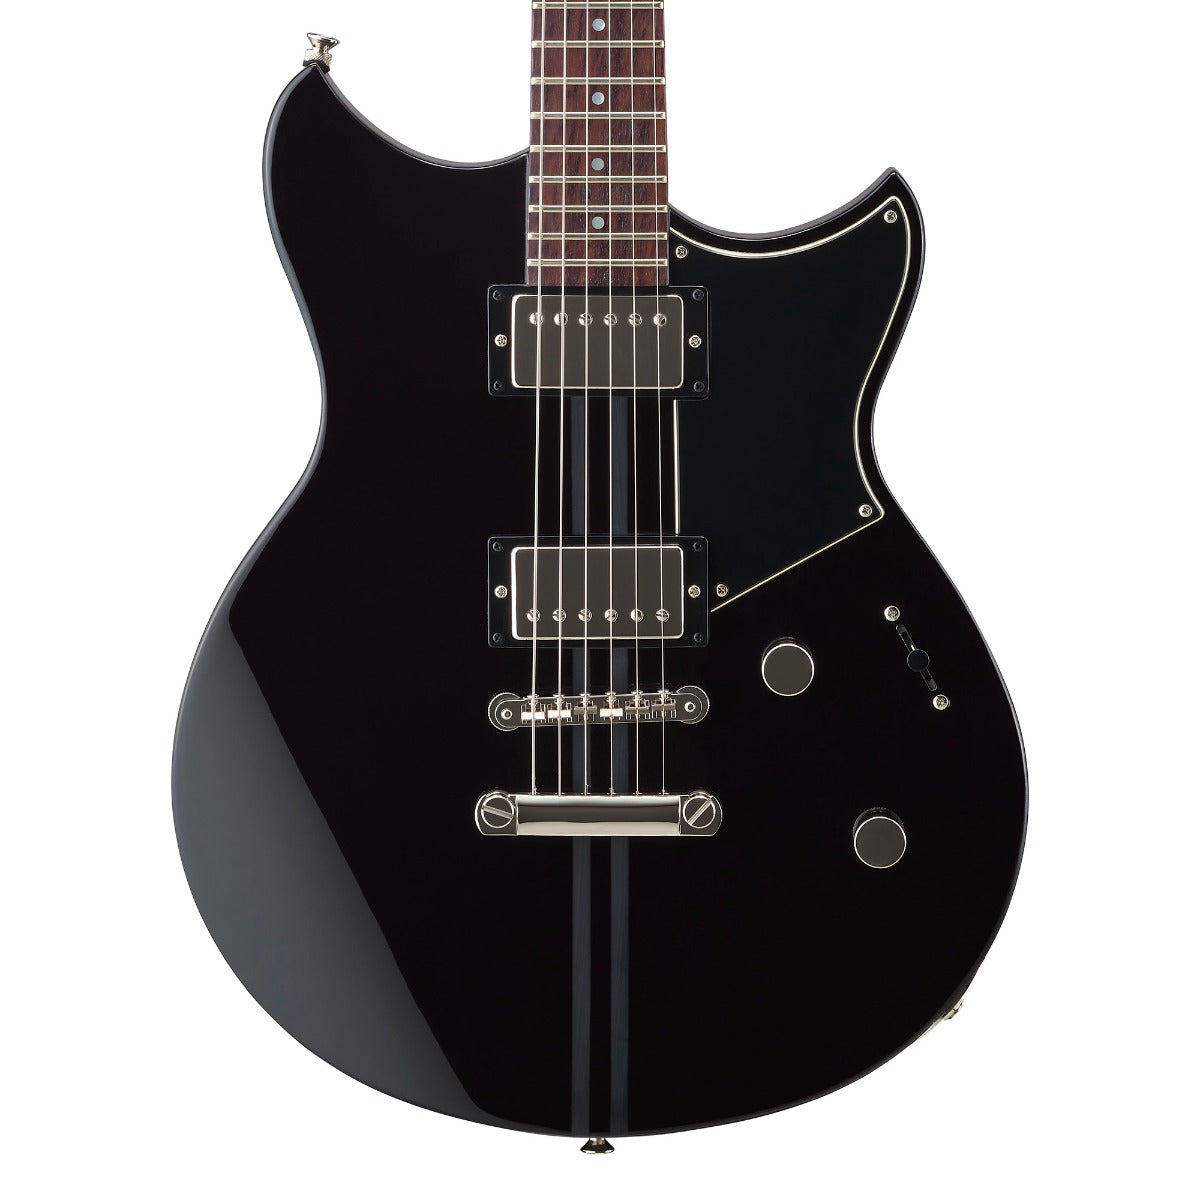 Yamaha RSE20 Revstar Element Electric Guitar - Black view 1